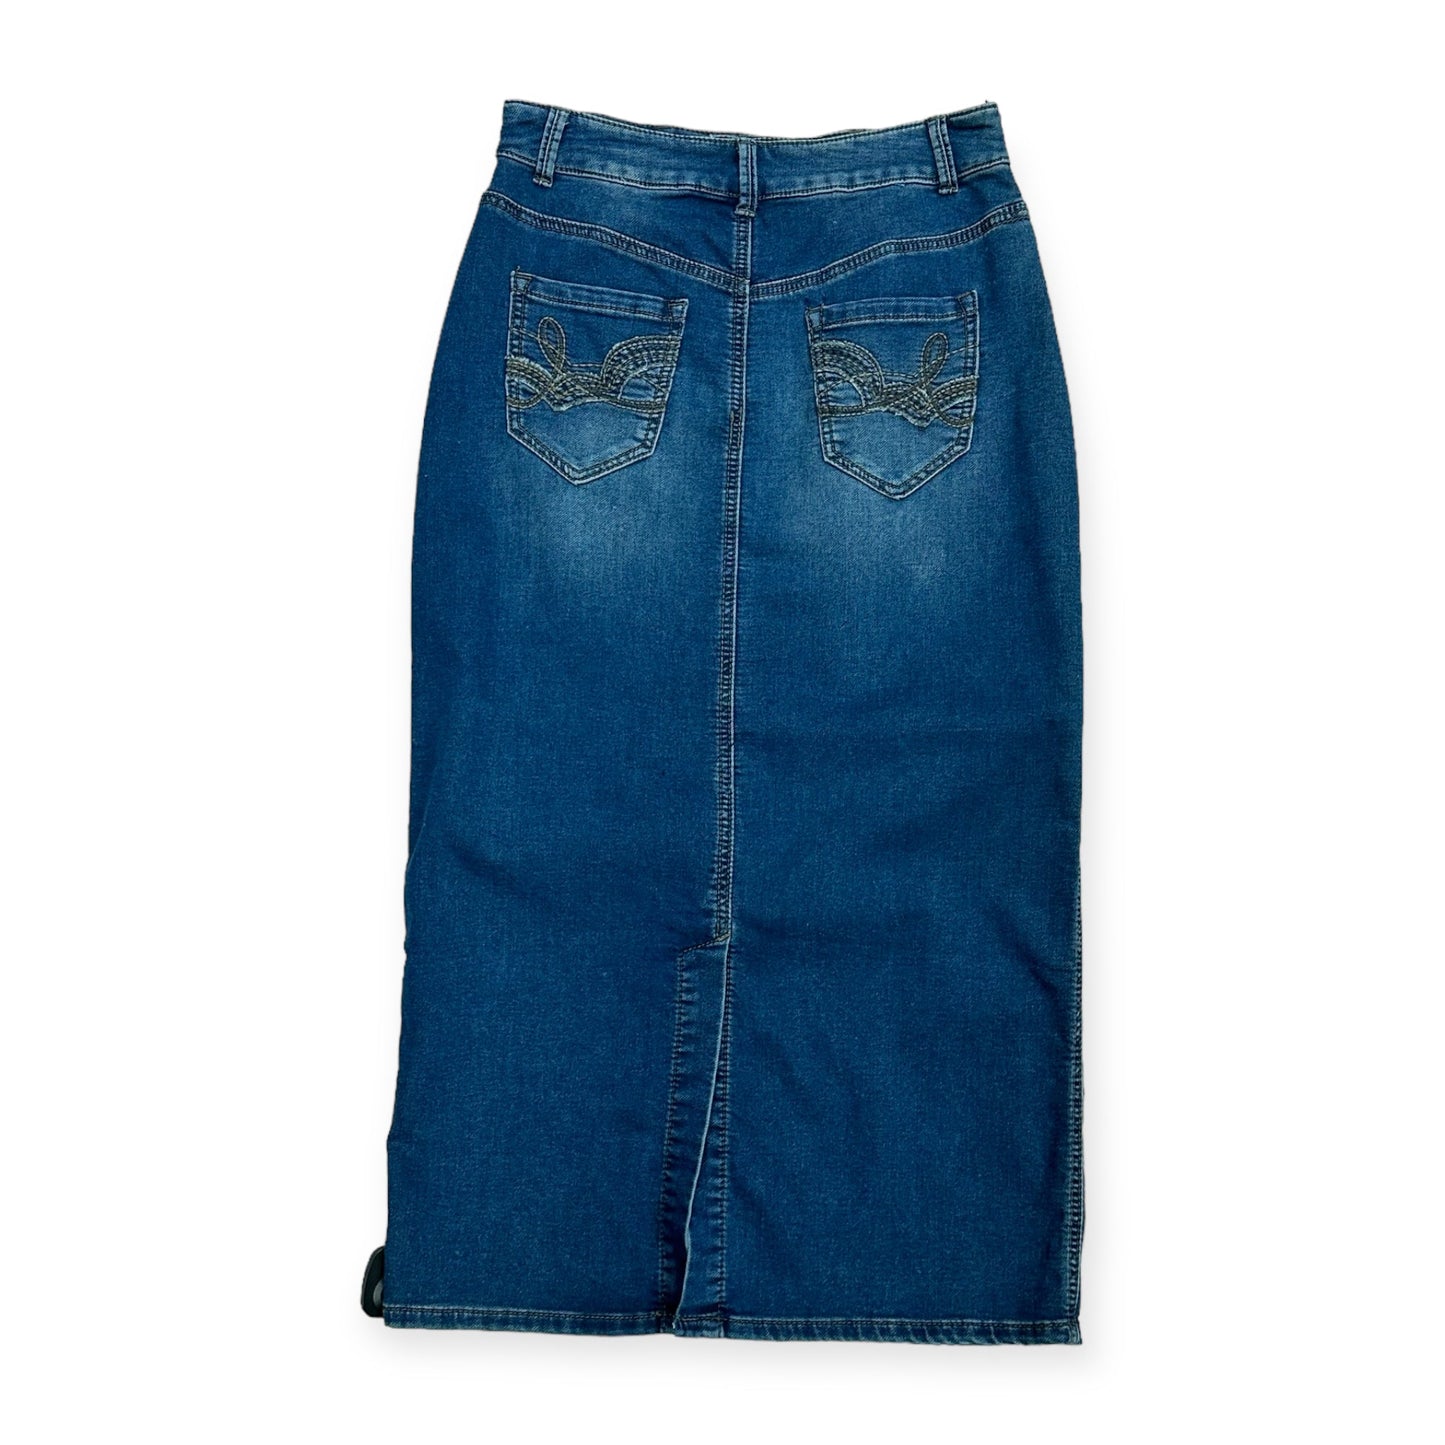 Blue Denim Skirt Midi Christopher And Banks, Size 4petite